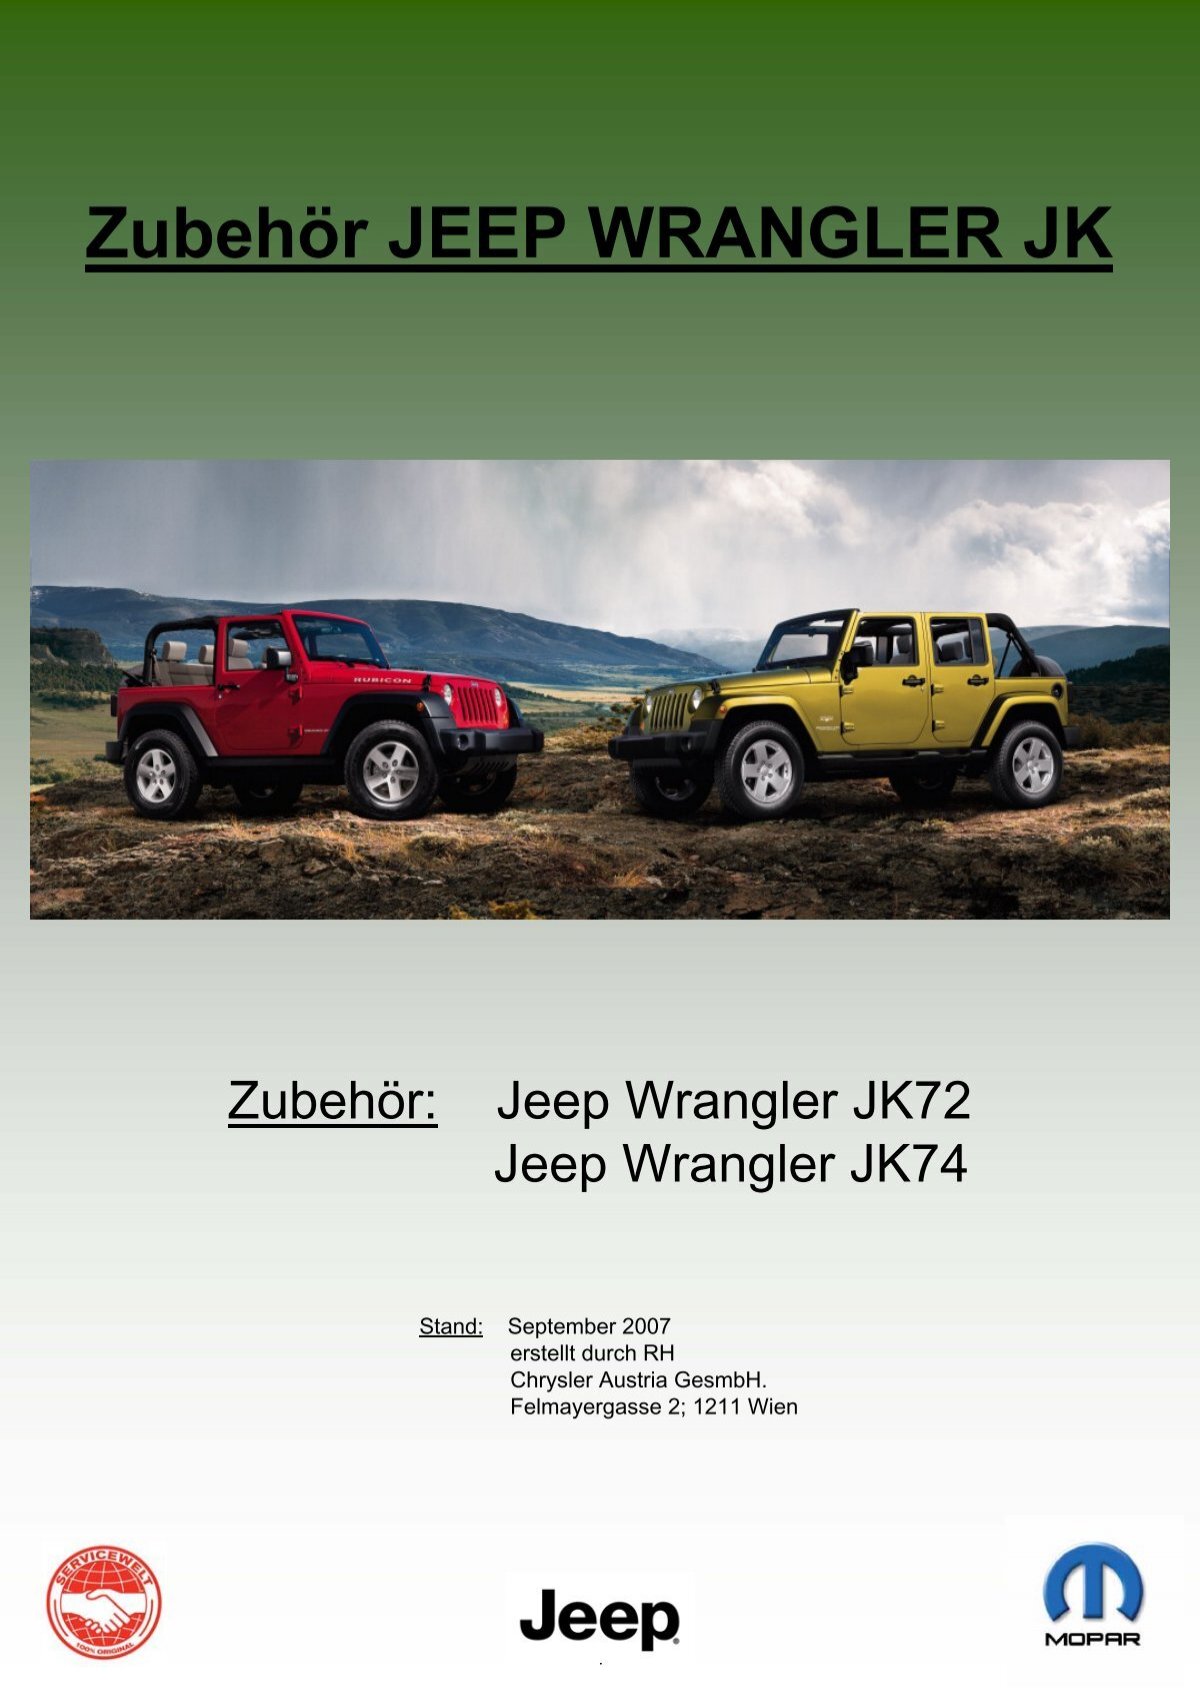 Zubehör Jeep Wrangler JK, Fahrzeugtechnik